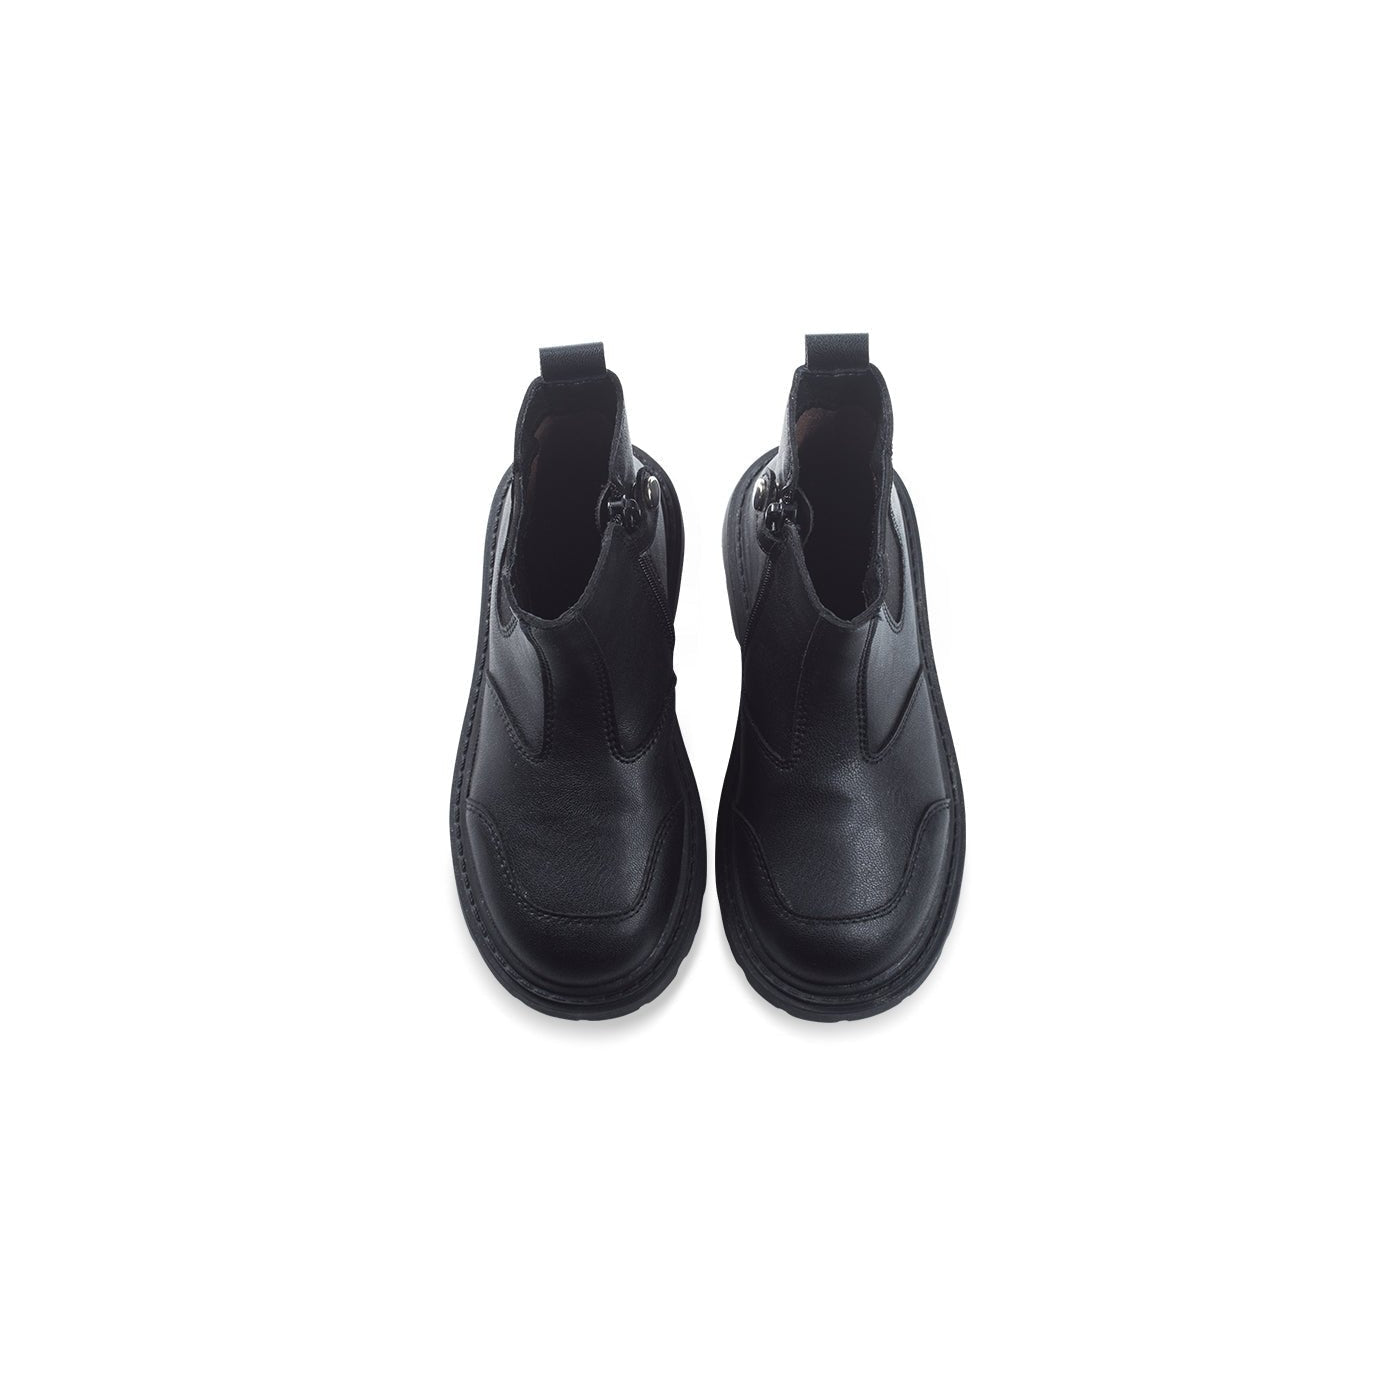 Warm Wrap Side Zip Breathable Anti-slip Kids Black Chelsea Boots - 0cm